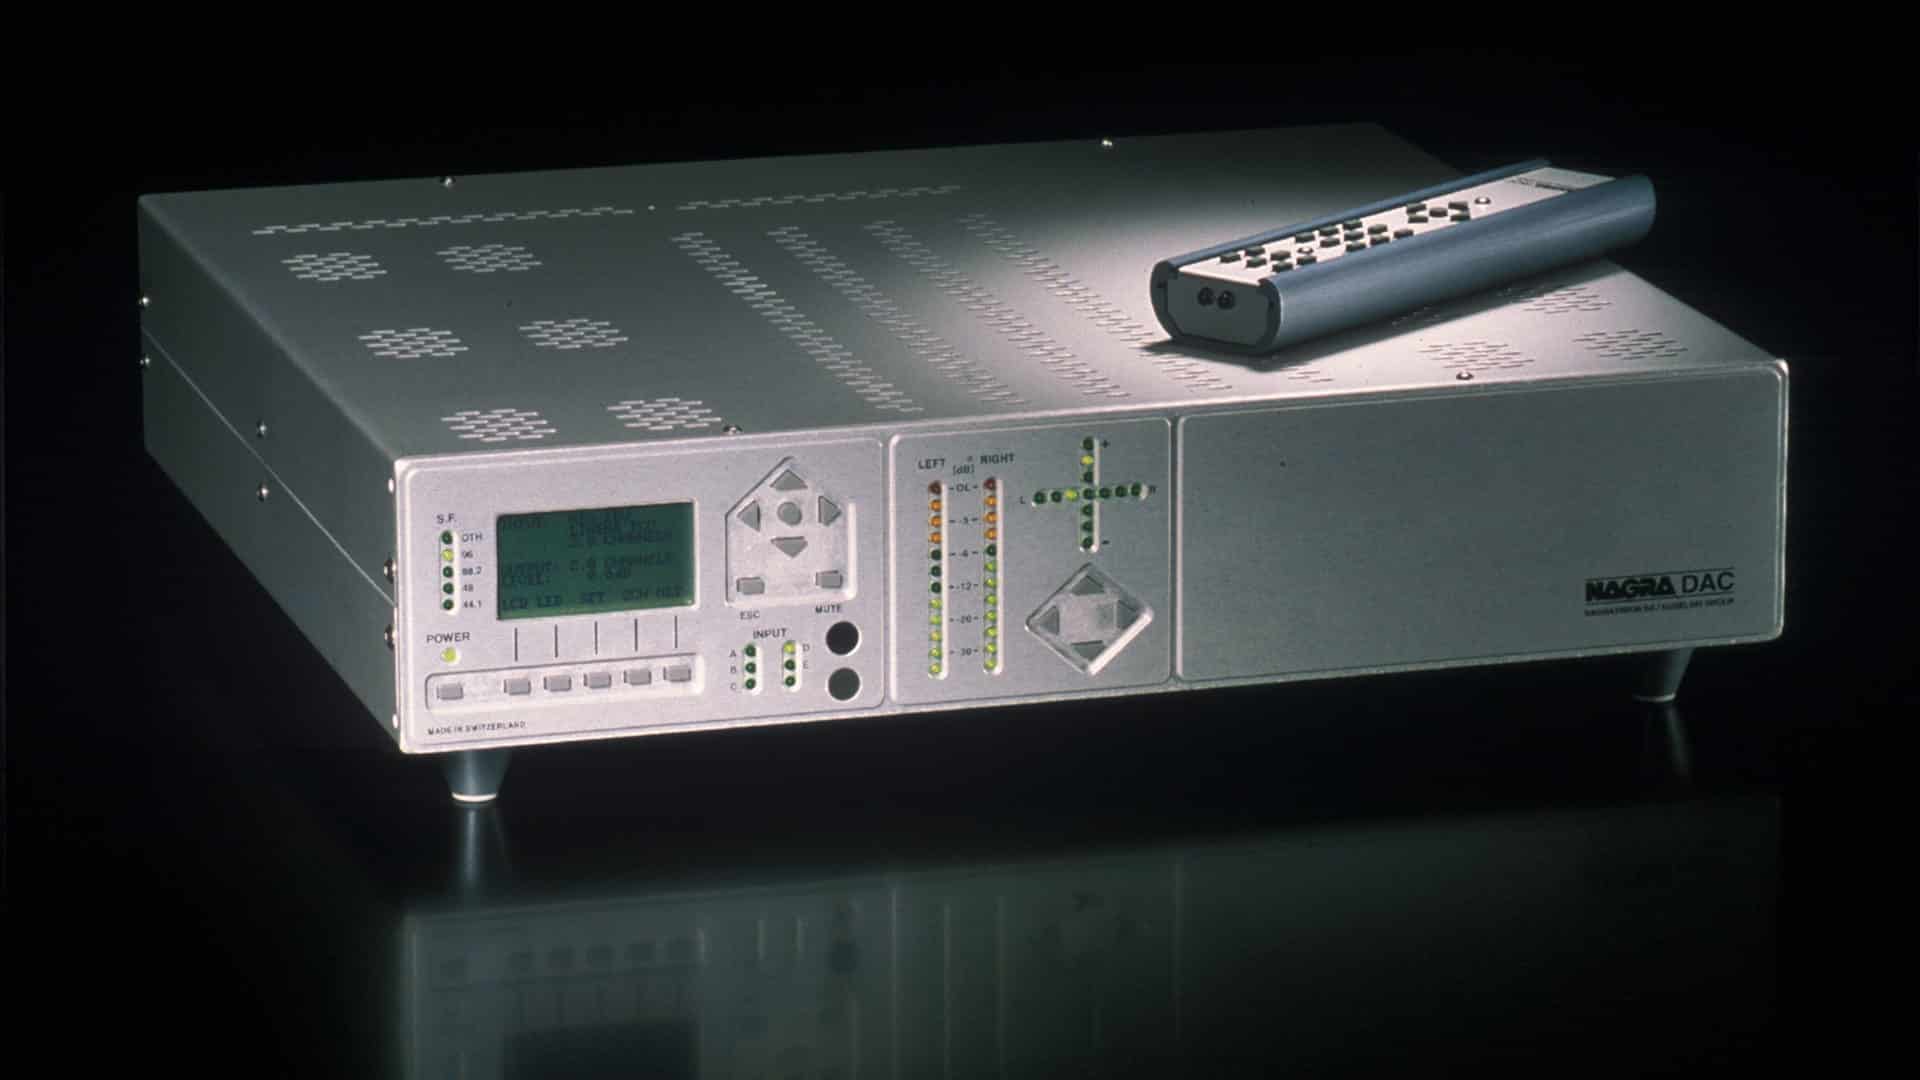 2003 NAGRA DAC digital analog converter front